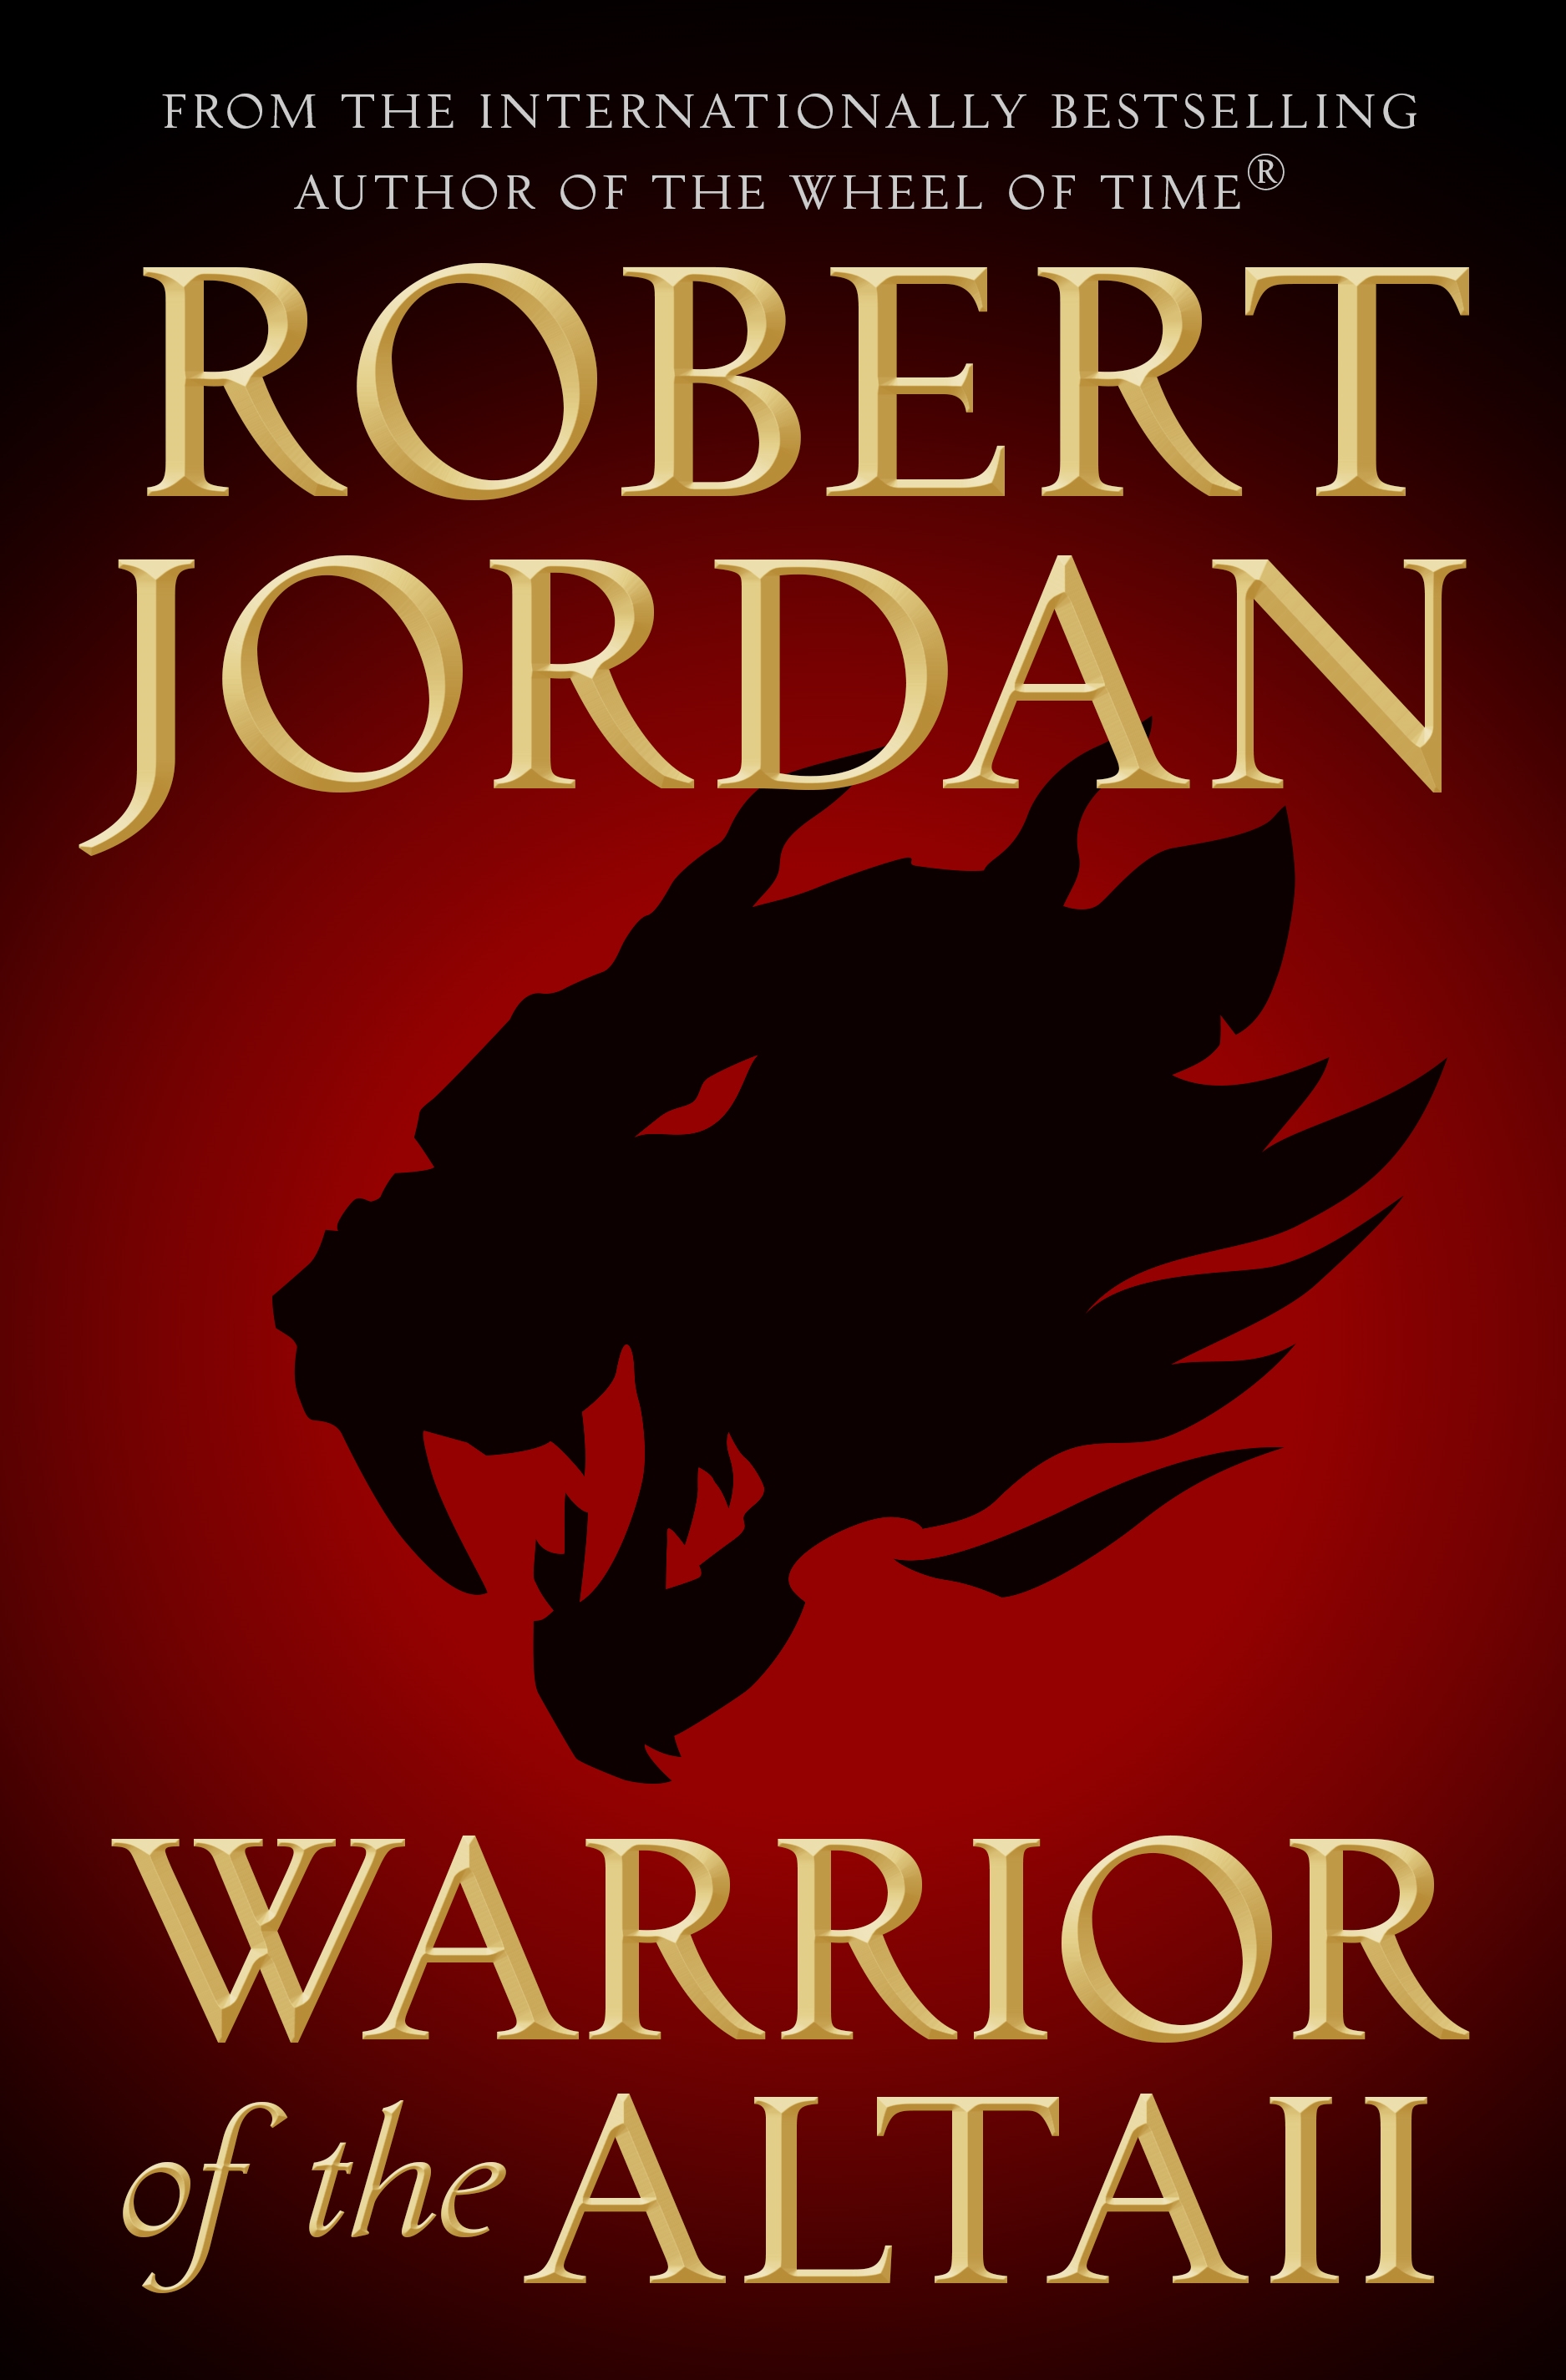 Book “Warrior of the Altaii” by Robert Jordan — October 8, 2019